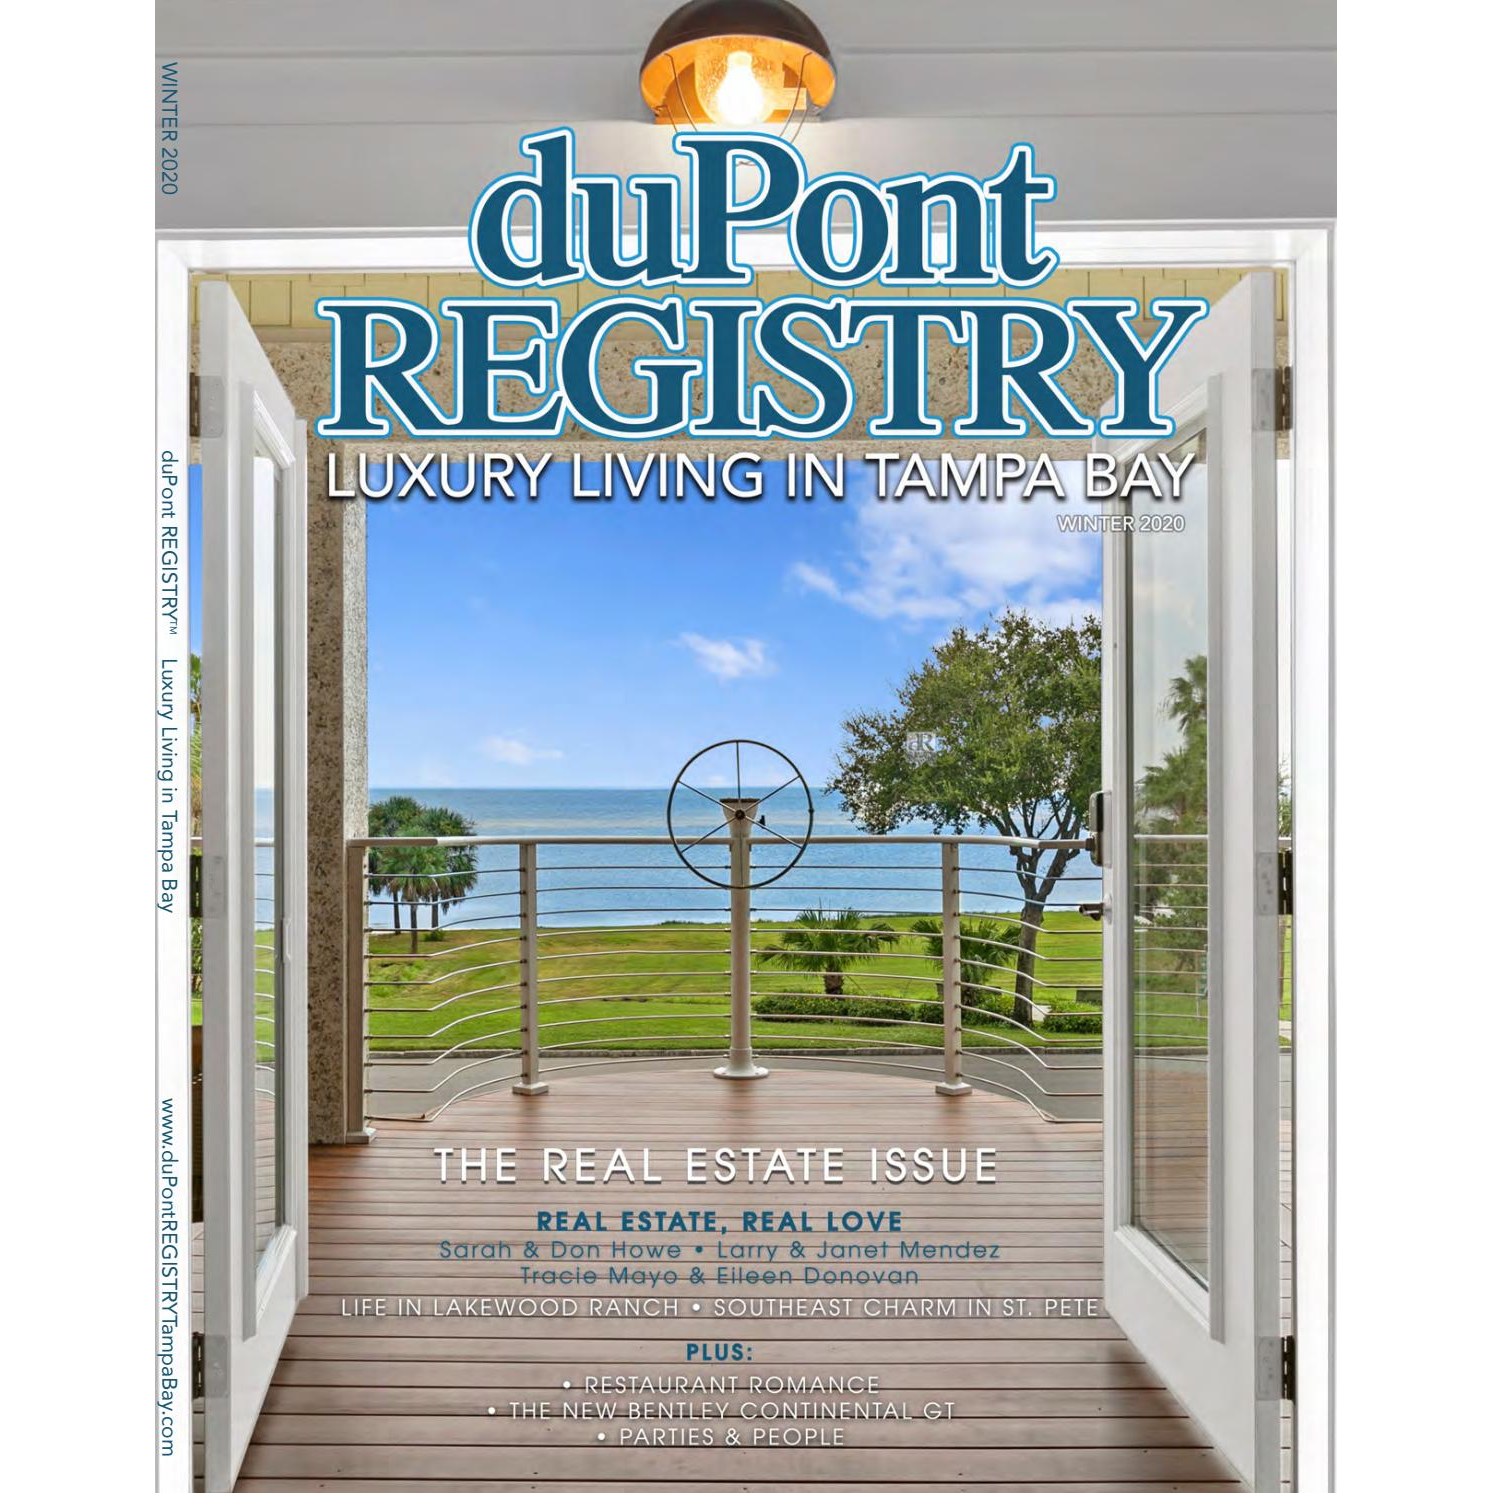 duPont Registry features interior design and home staging expert Karen Post